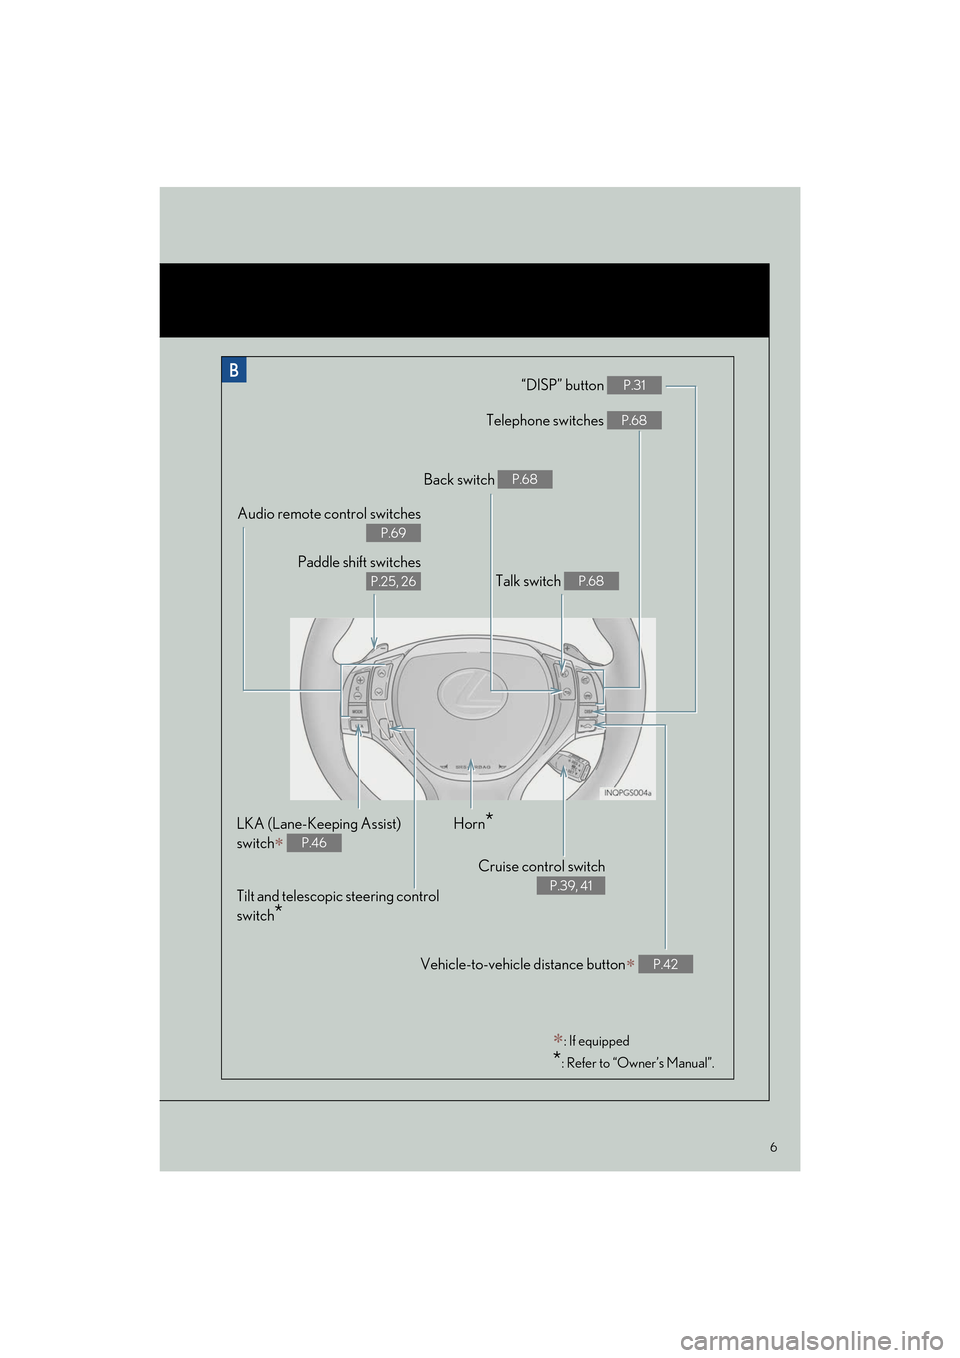 Lexus GS450h 2013  Navigation Manual 6
GS450h_QG_U (OM30D12U)
“DISP” button P.31
Telephone switches P.68
Vehicle-to-vehicle distance button∗ P.42
Back switch P.68
Talk switch P.68
Audio remote control switches 
P.69
Paddle shift sw